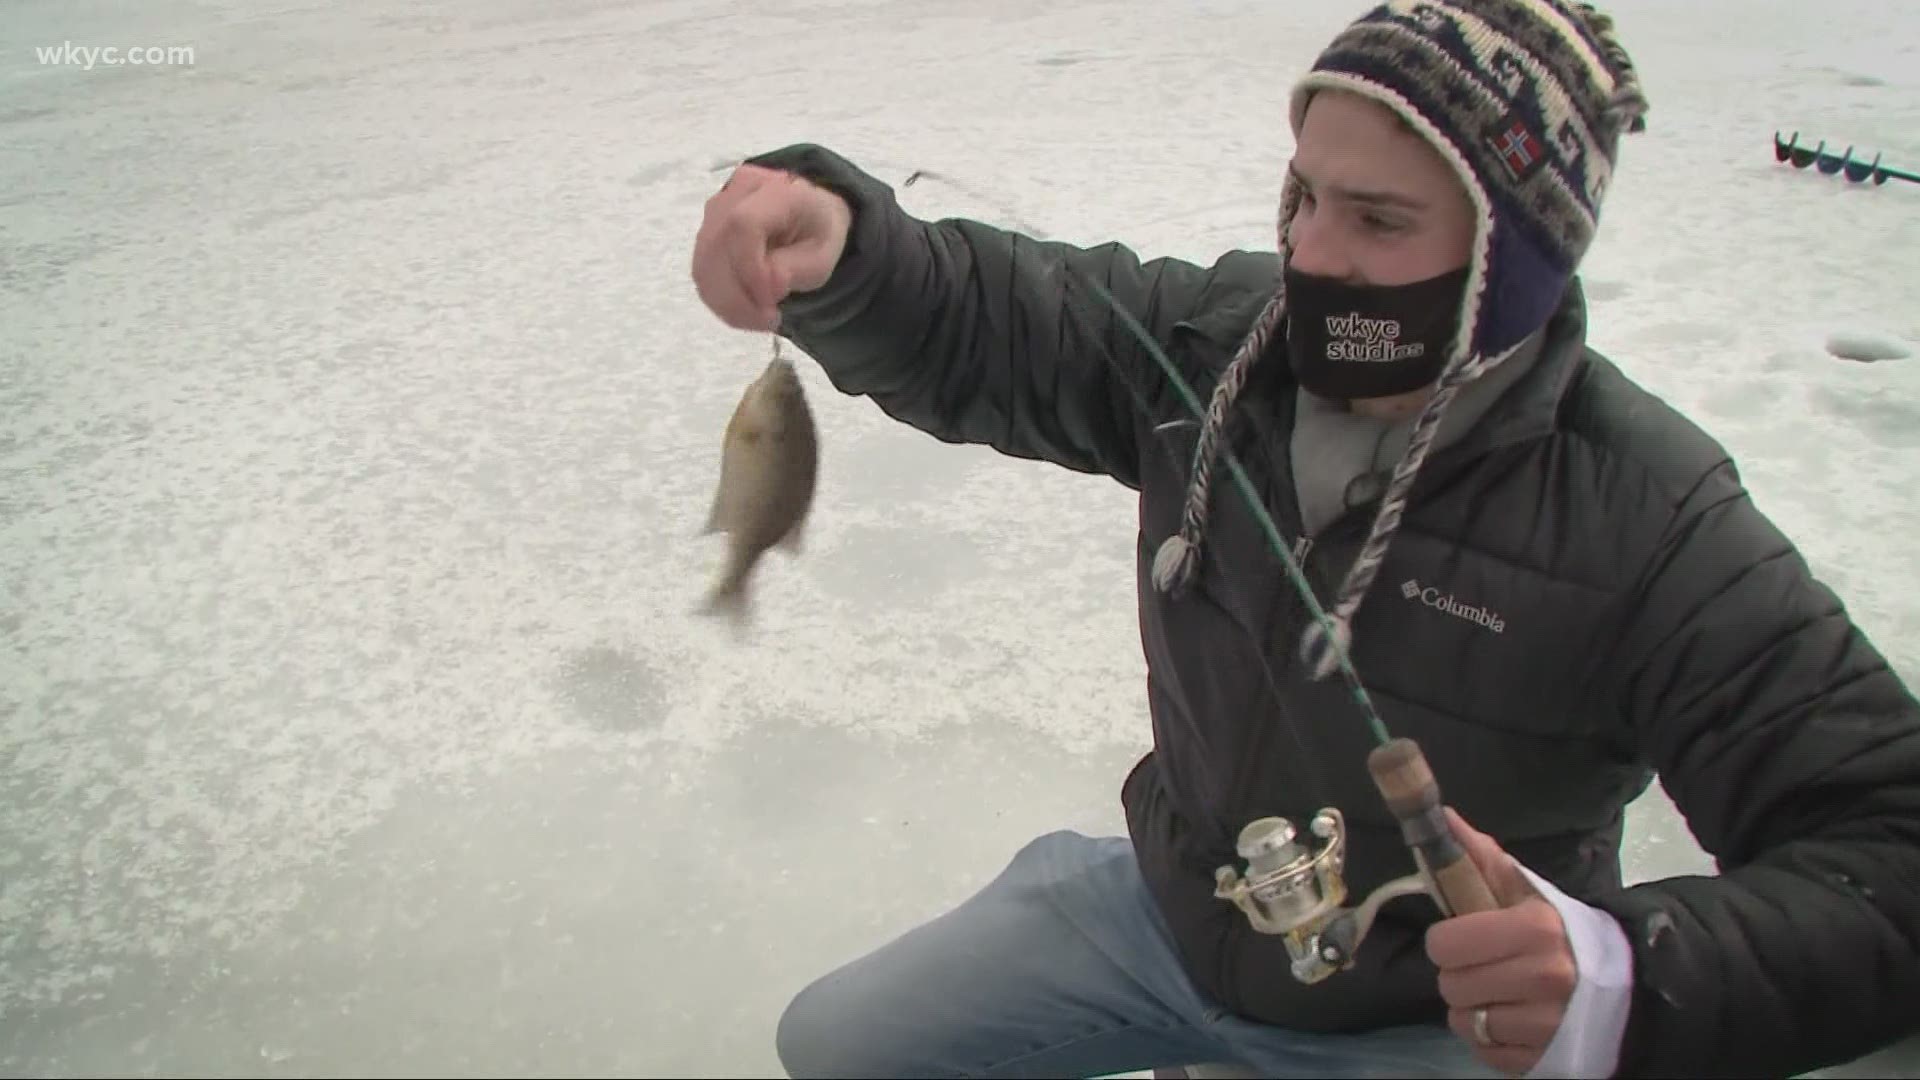 Feb. 12, 2021: In today's GO-HIO adventure with 3News' Matt Standridge, we're going ice fishing in the Portage Lakes.